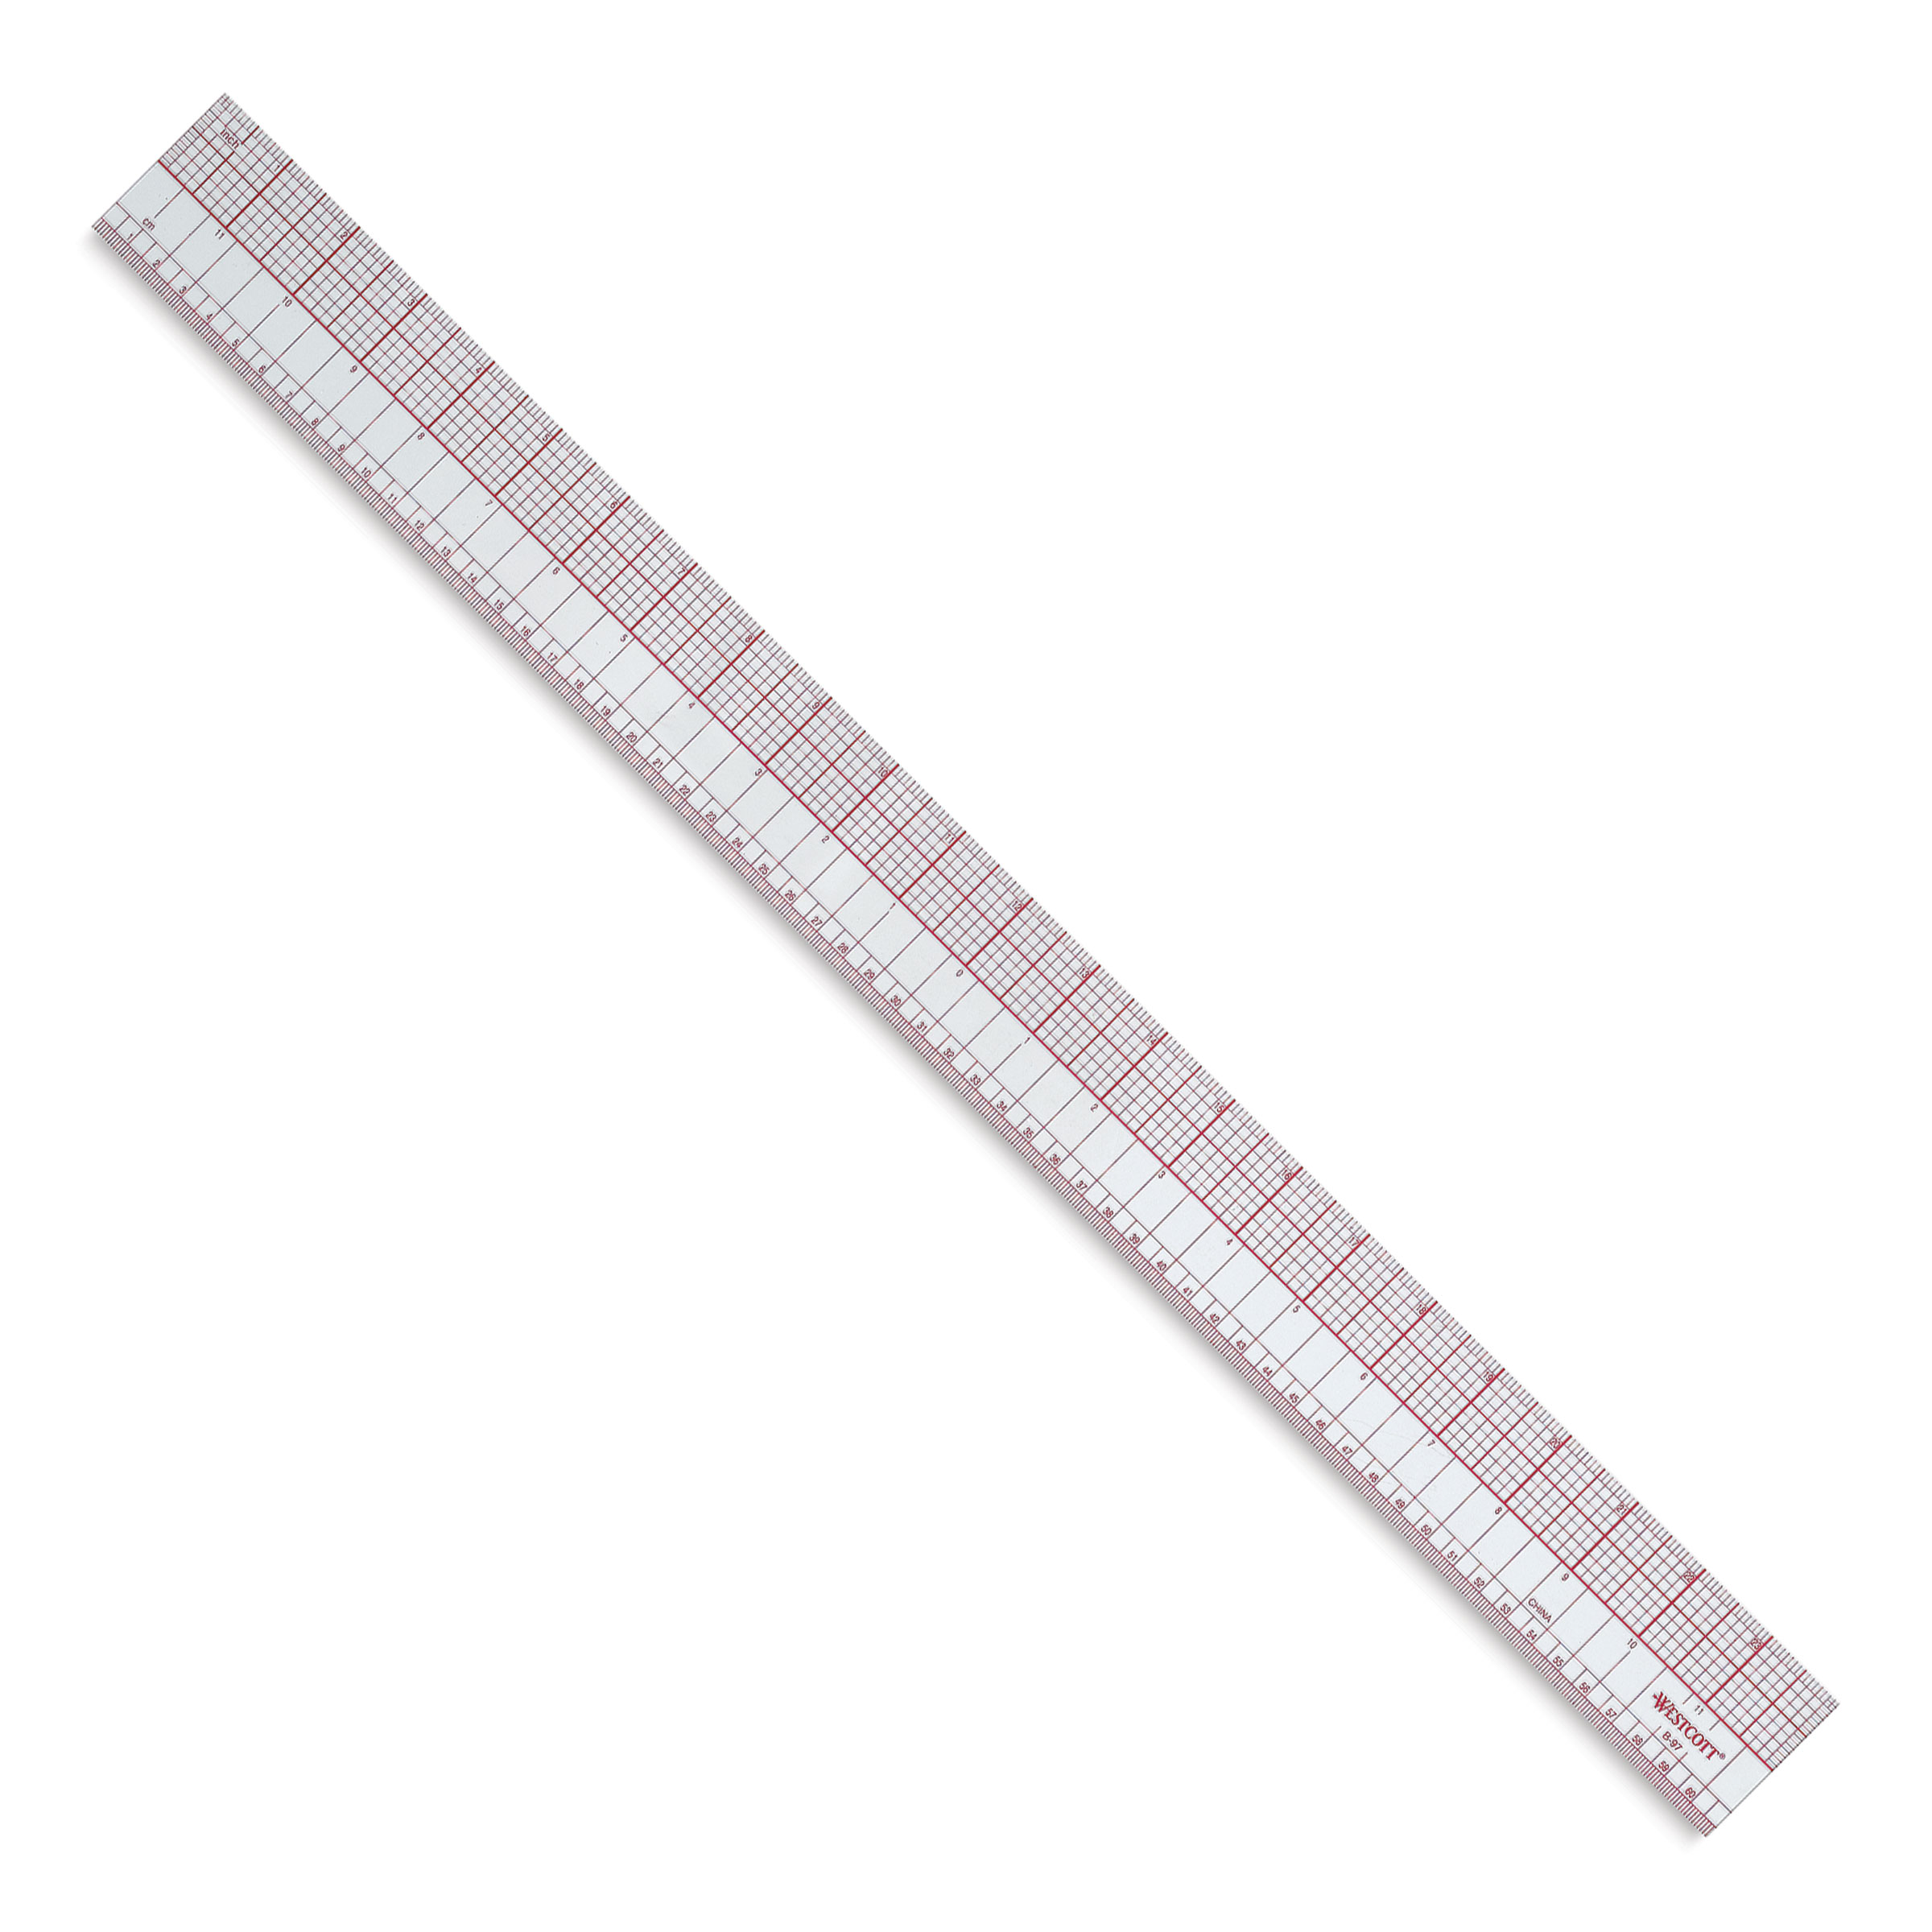 C-Thru Flexible Inch & Metric Ruler, 6